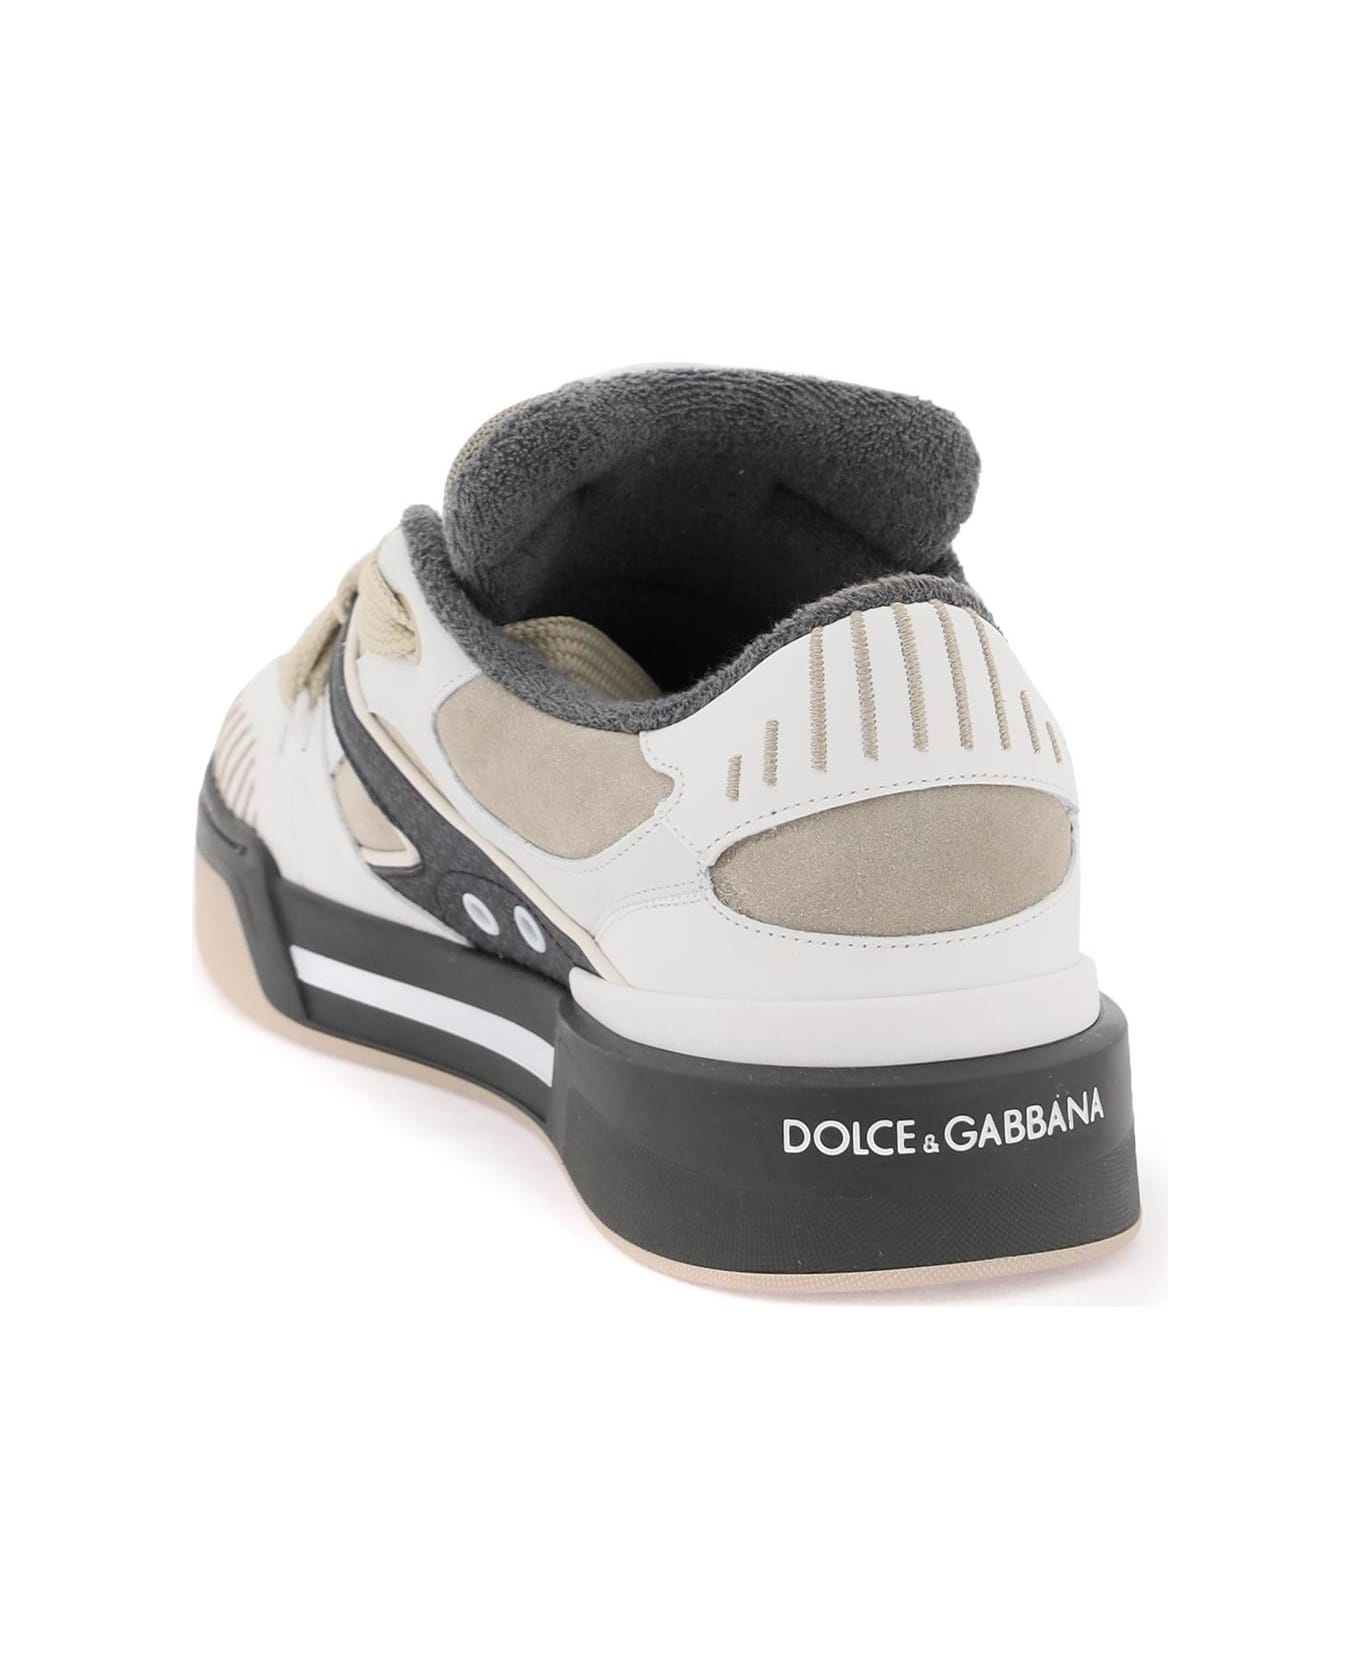 Dolce & Gabbana New Roma Sneakers - Tortora